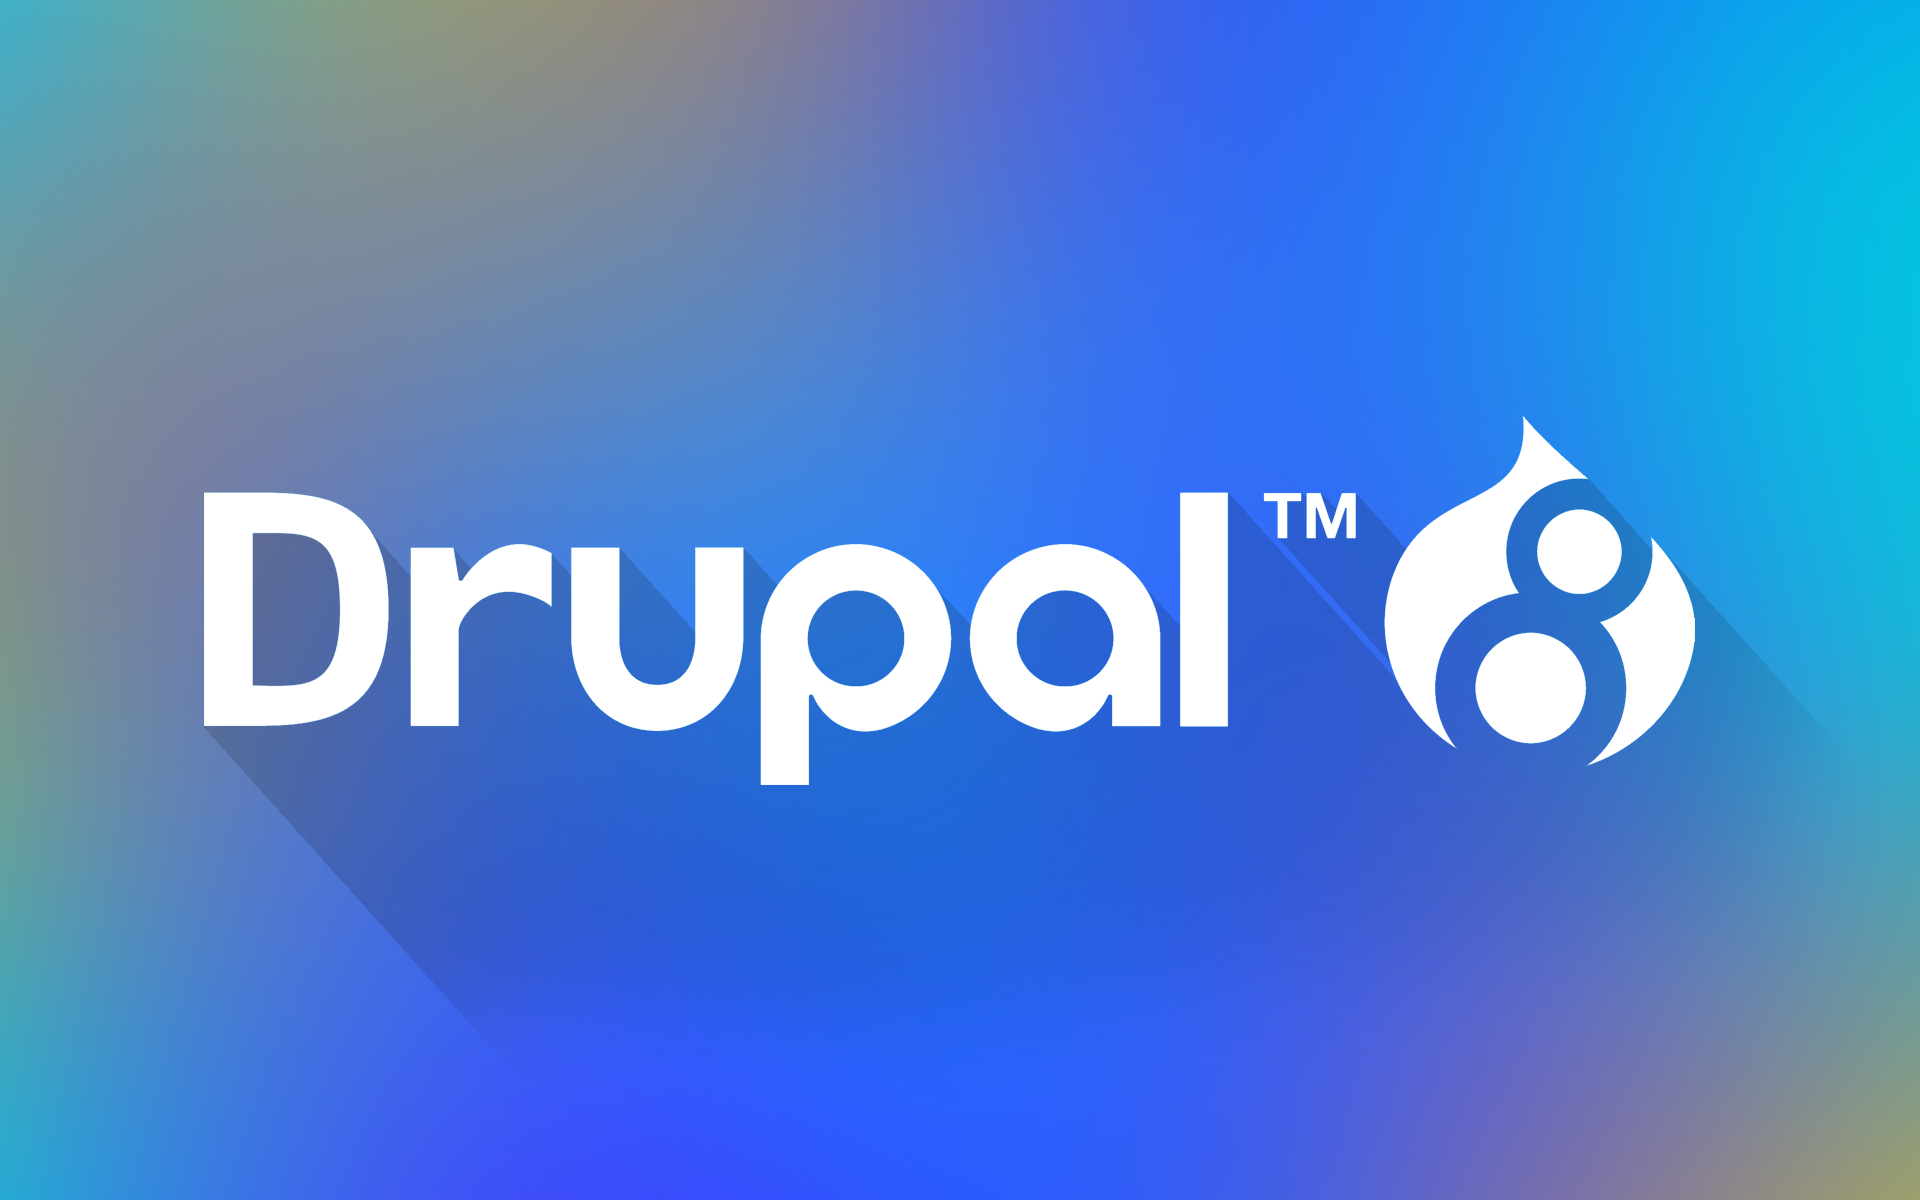 drupal 8 logo